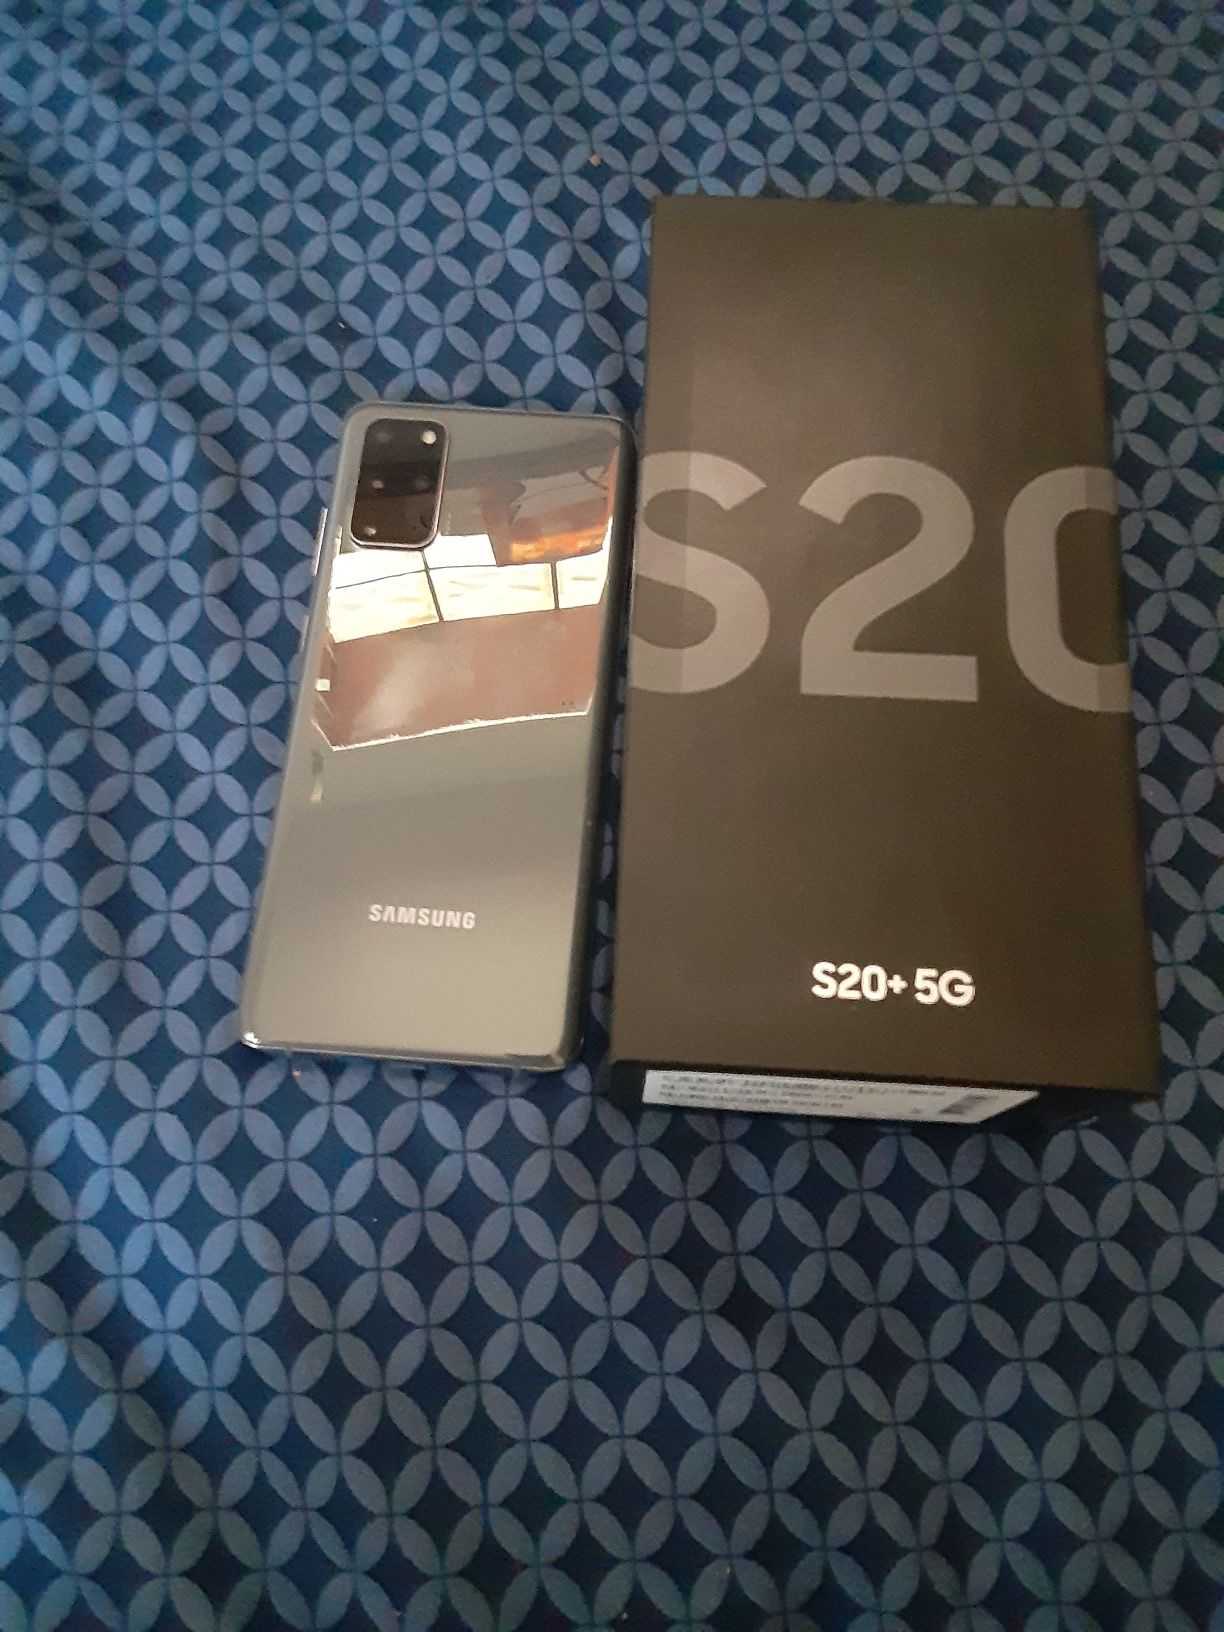 Samsung s20 plus unlocked